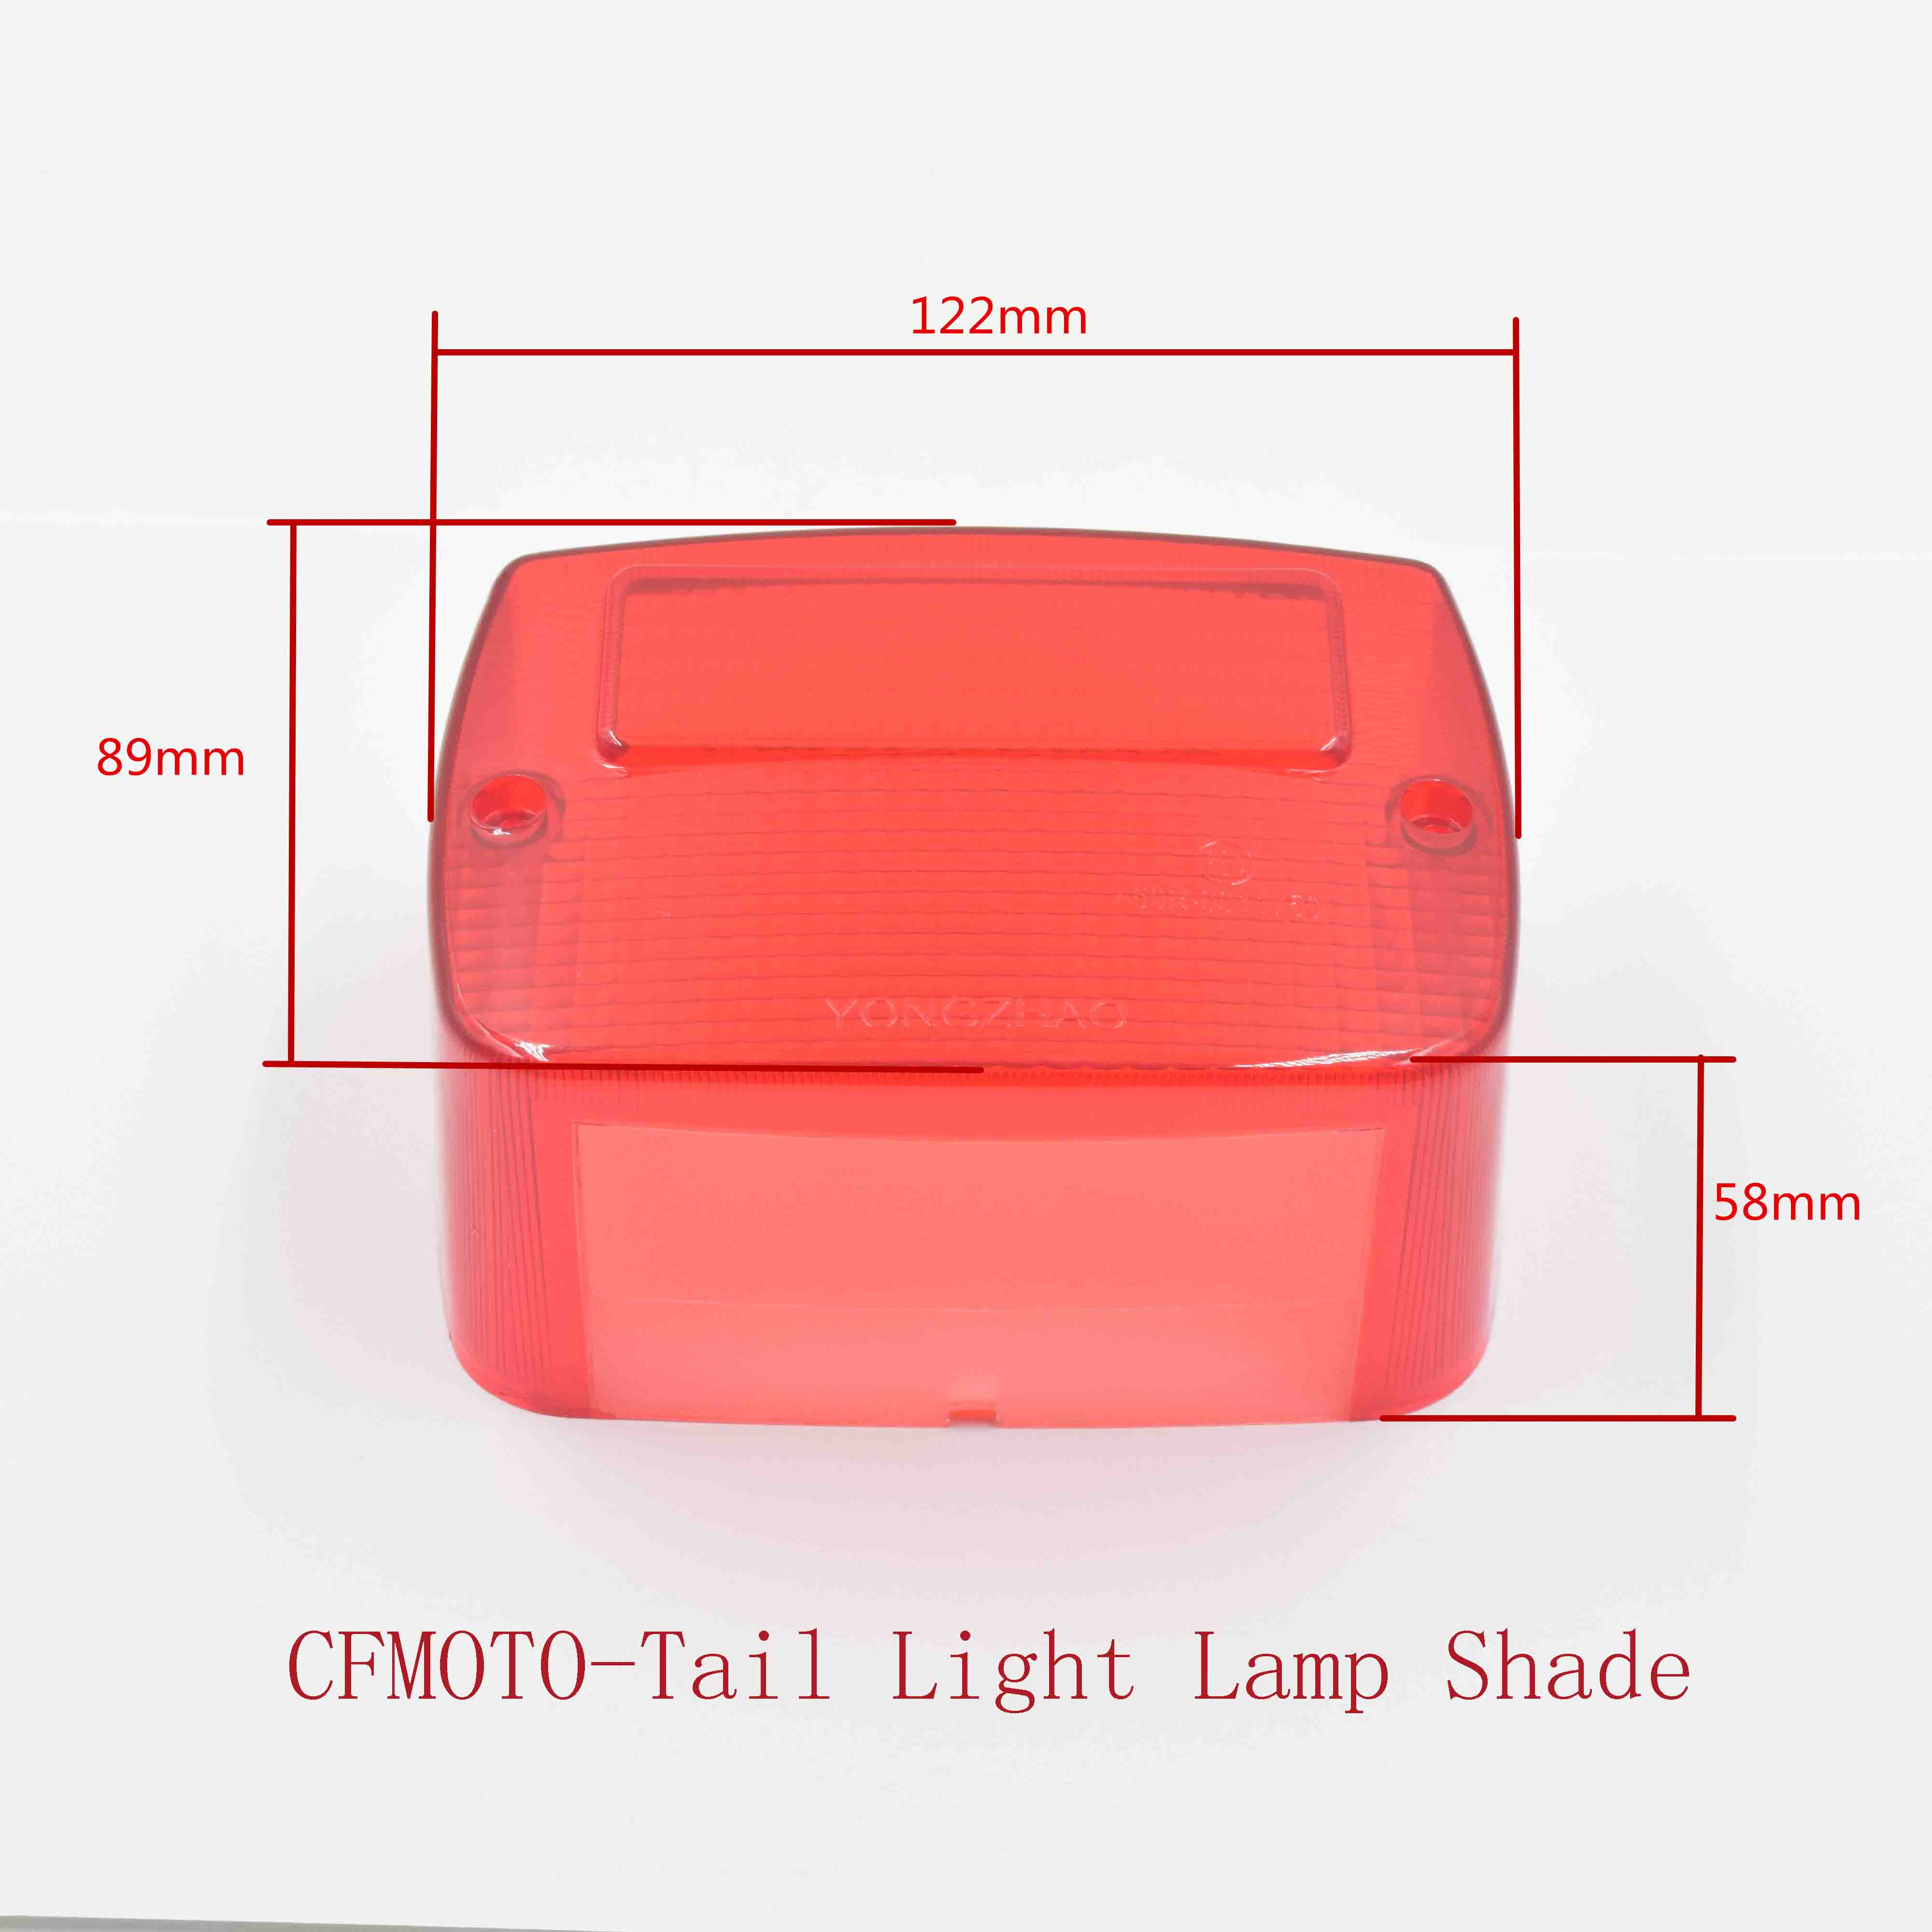 CFMOTO-Tail Light Lamp Shade 